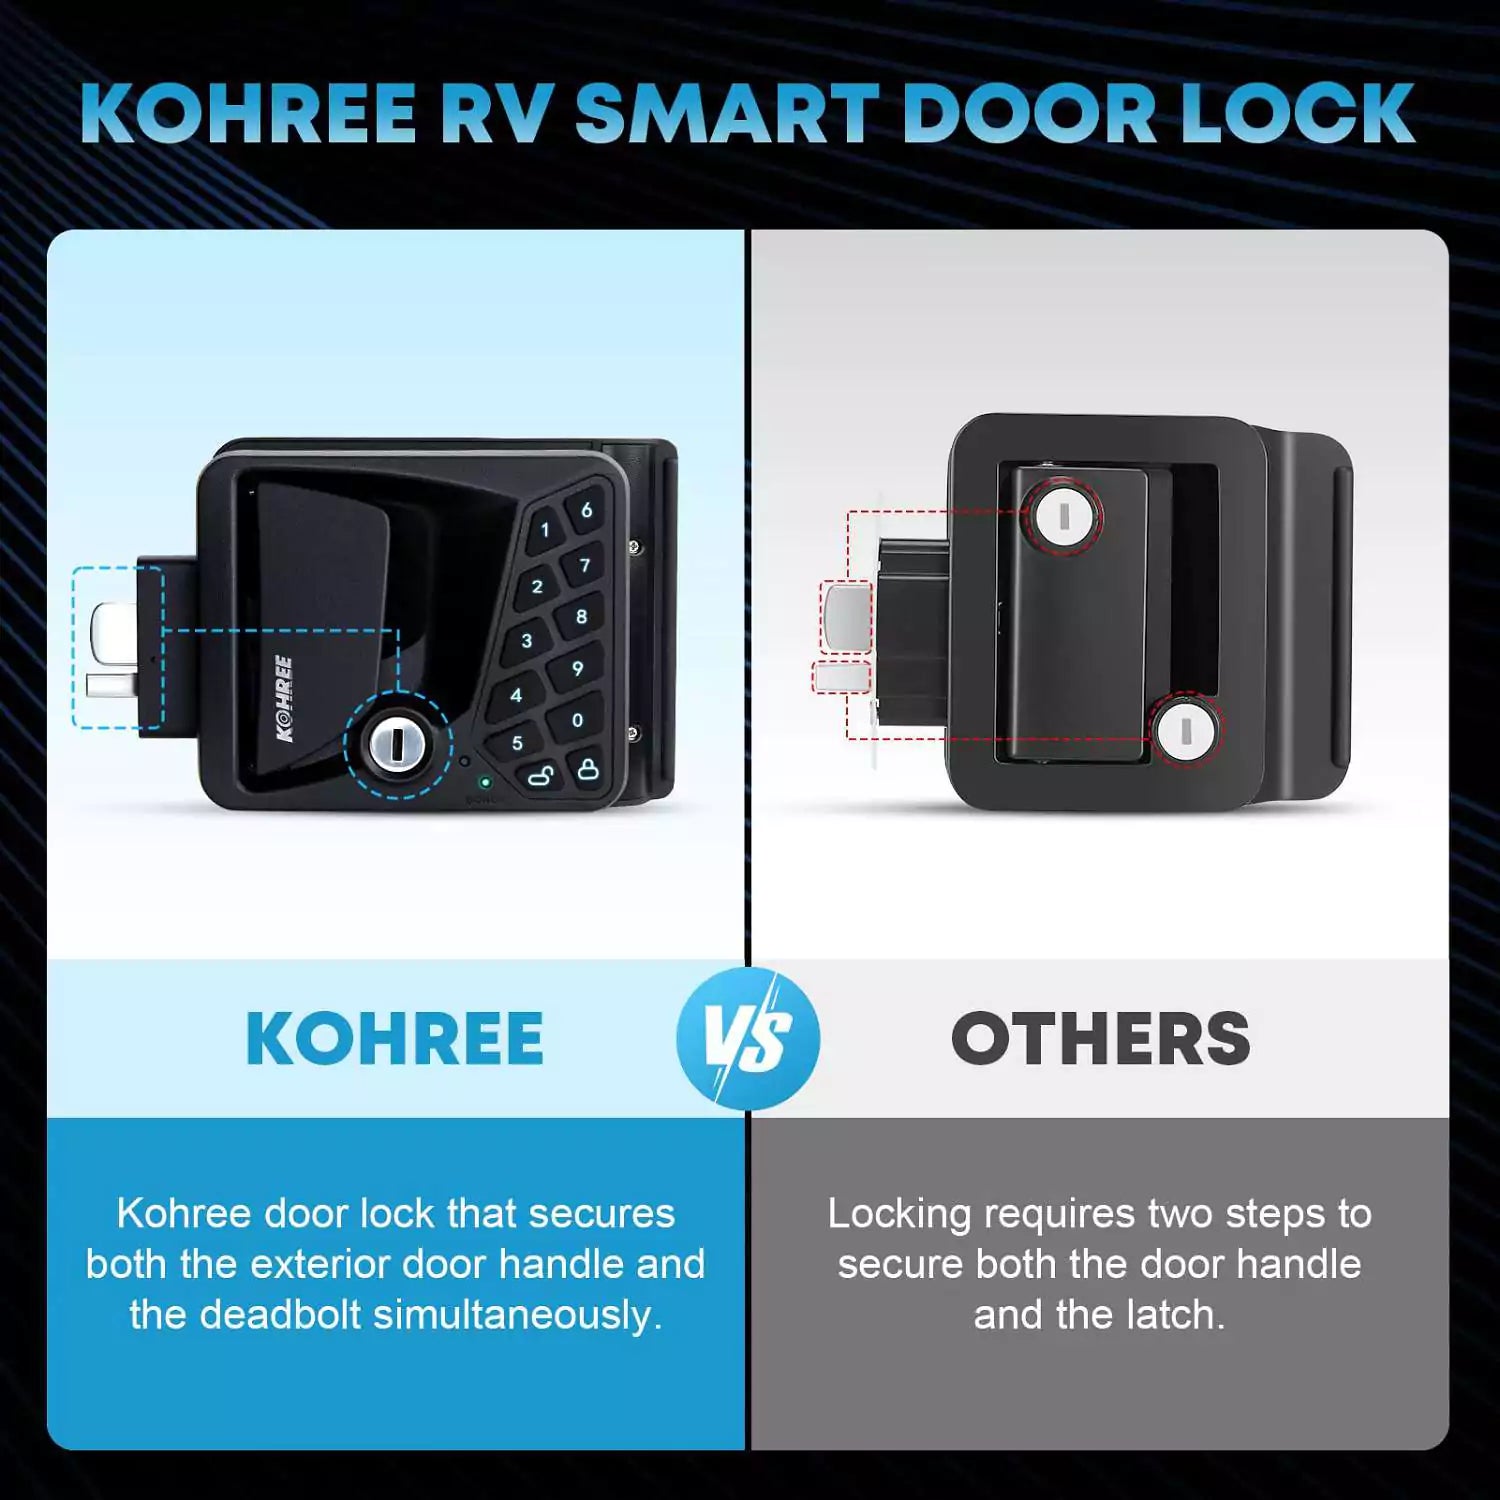 Kohree RV smart door lock comparison